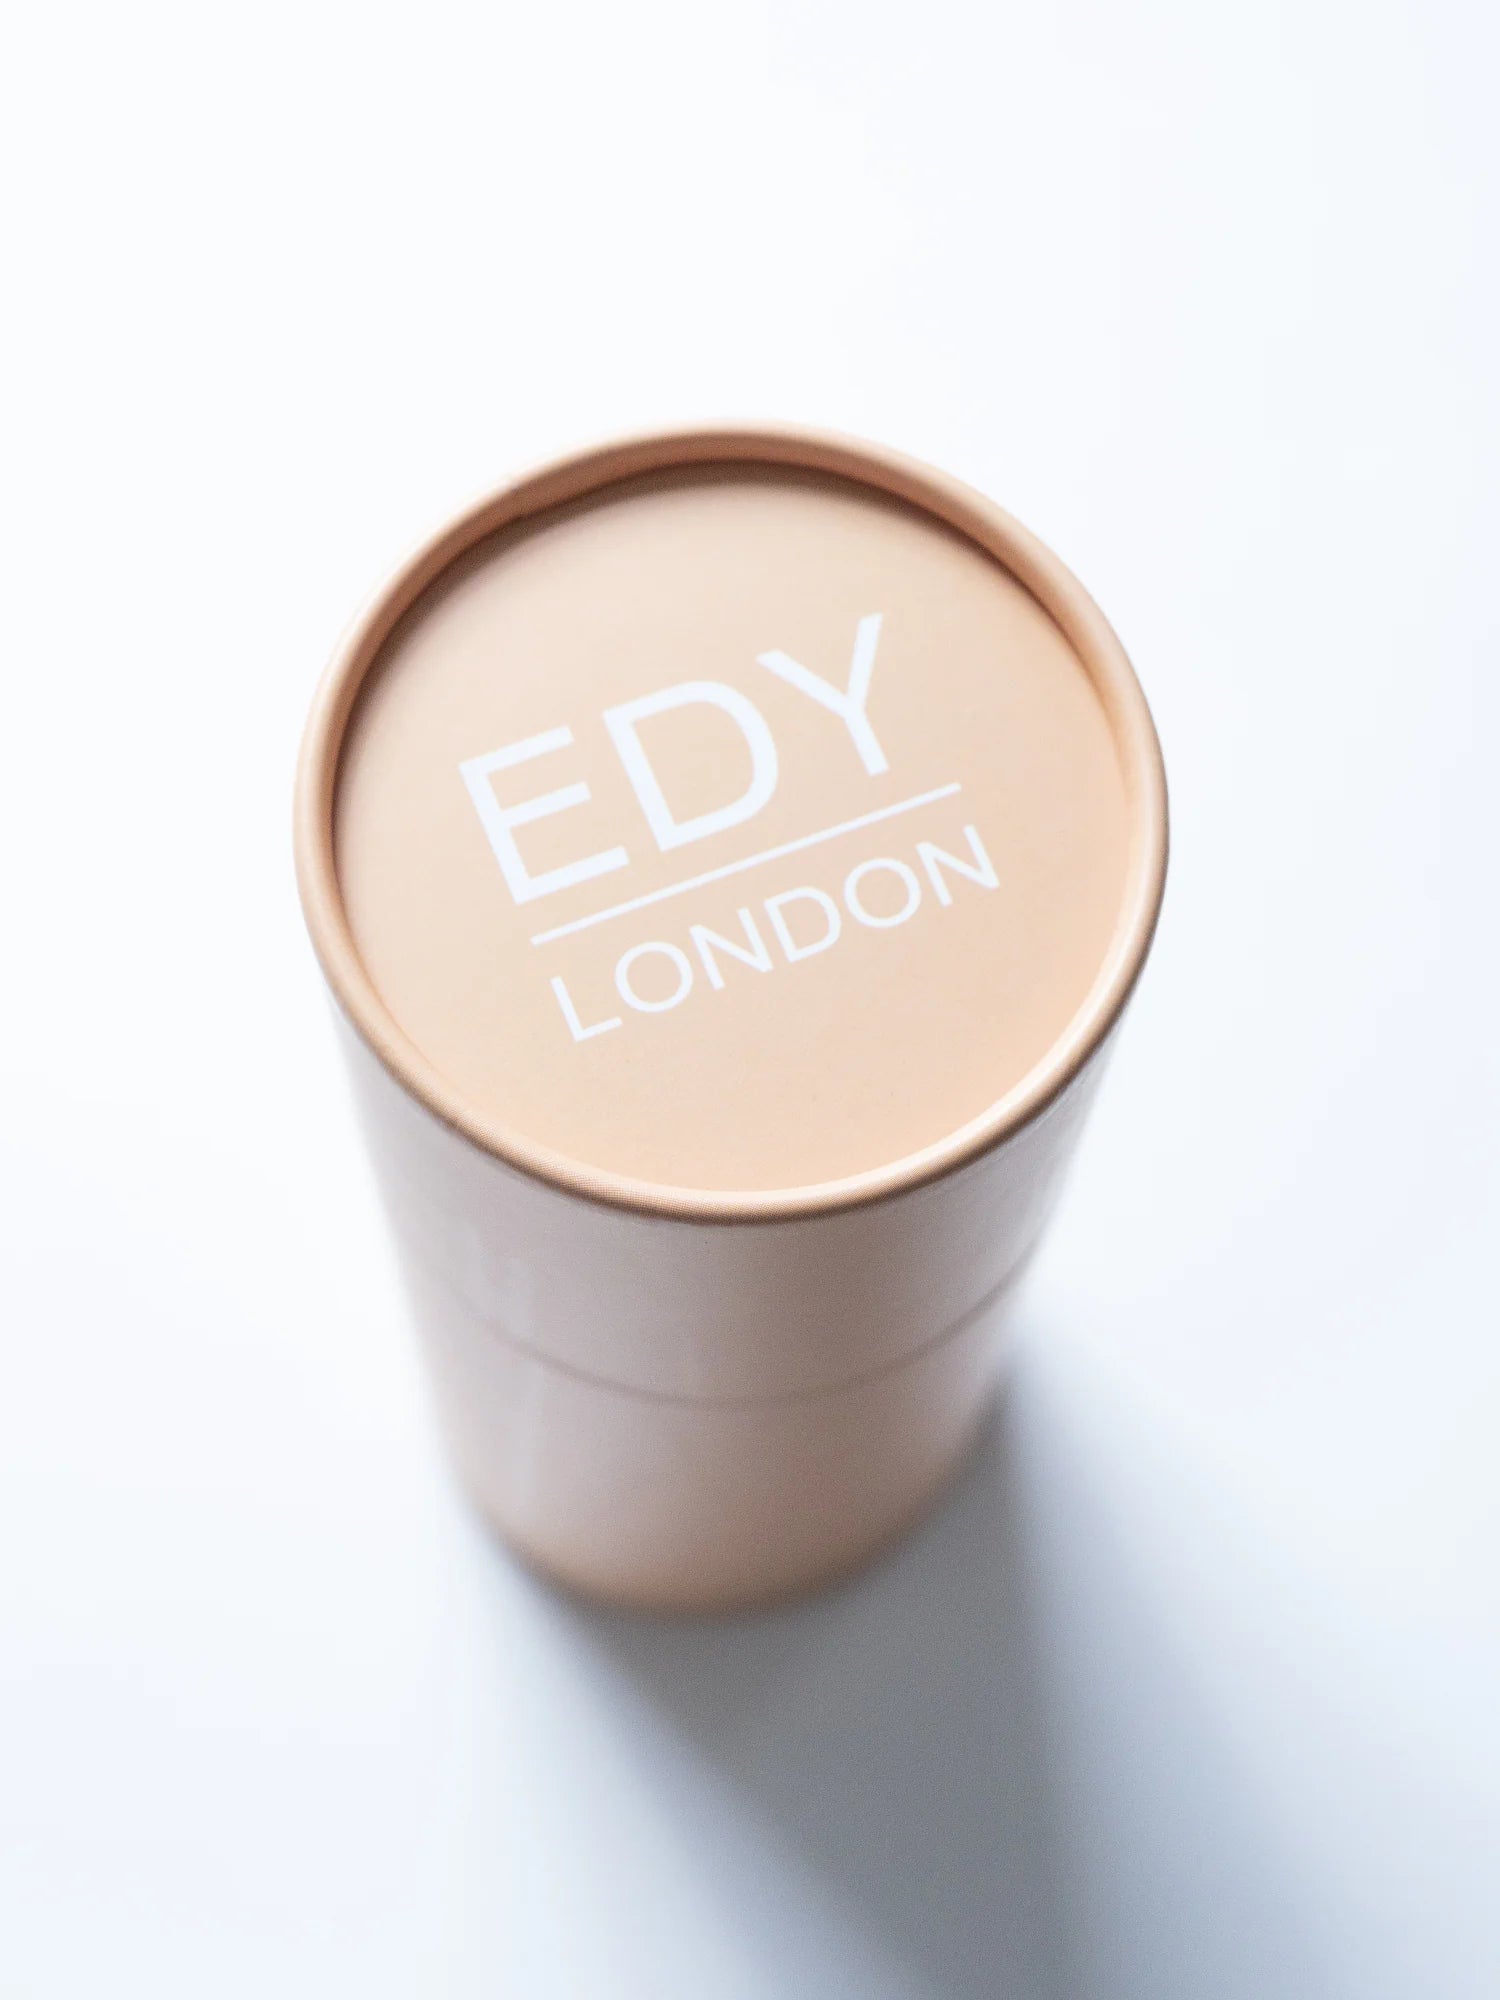 Essential Brush Set 505 Make-up Brush EDY LONDON    - EDY LONDON PRODUCTS UK - The Best Makeup Brushes - shop.edy.london